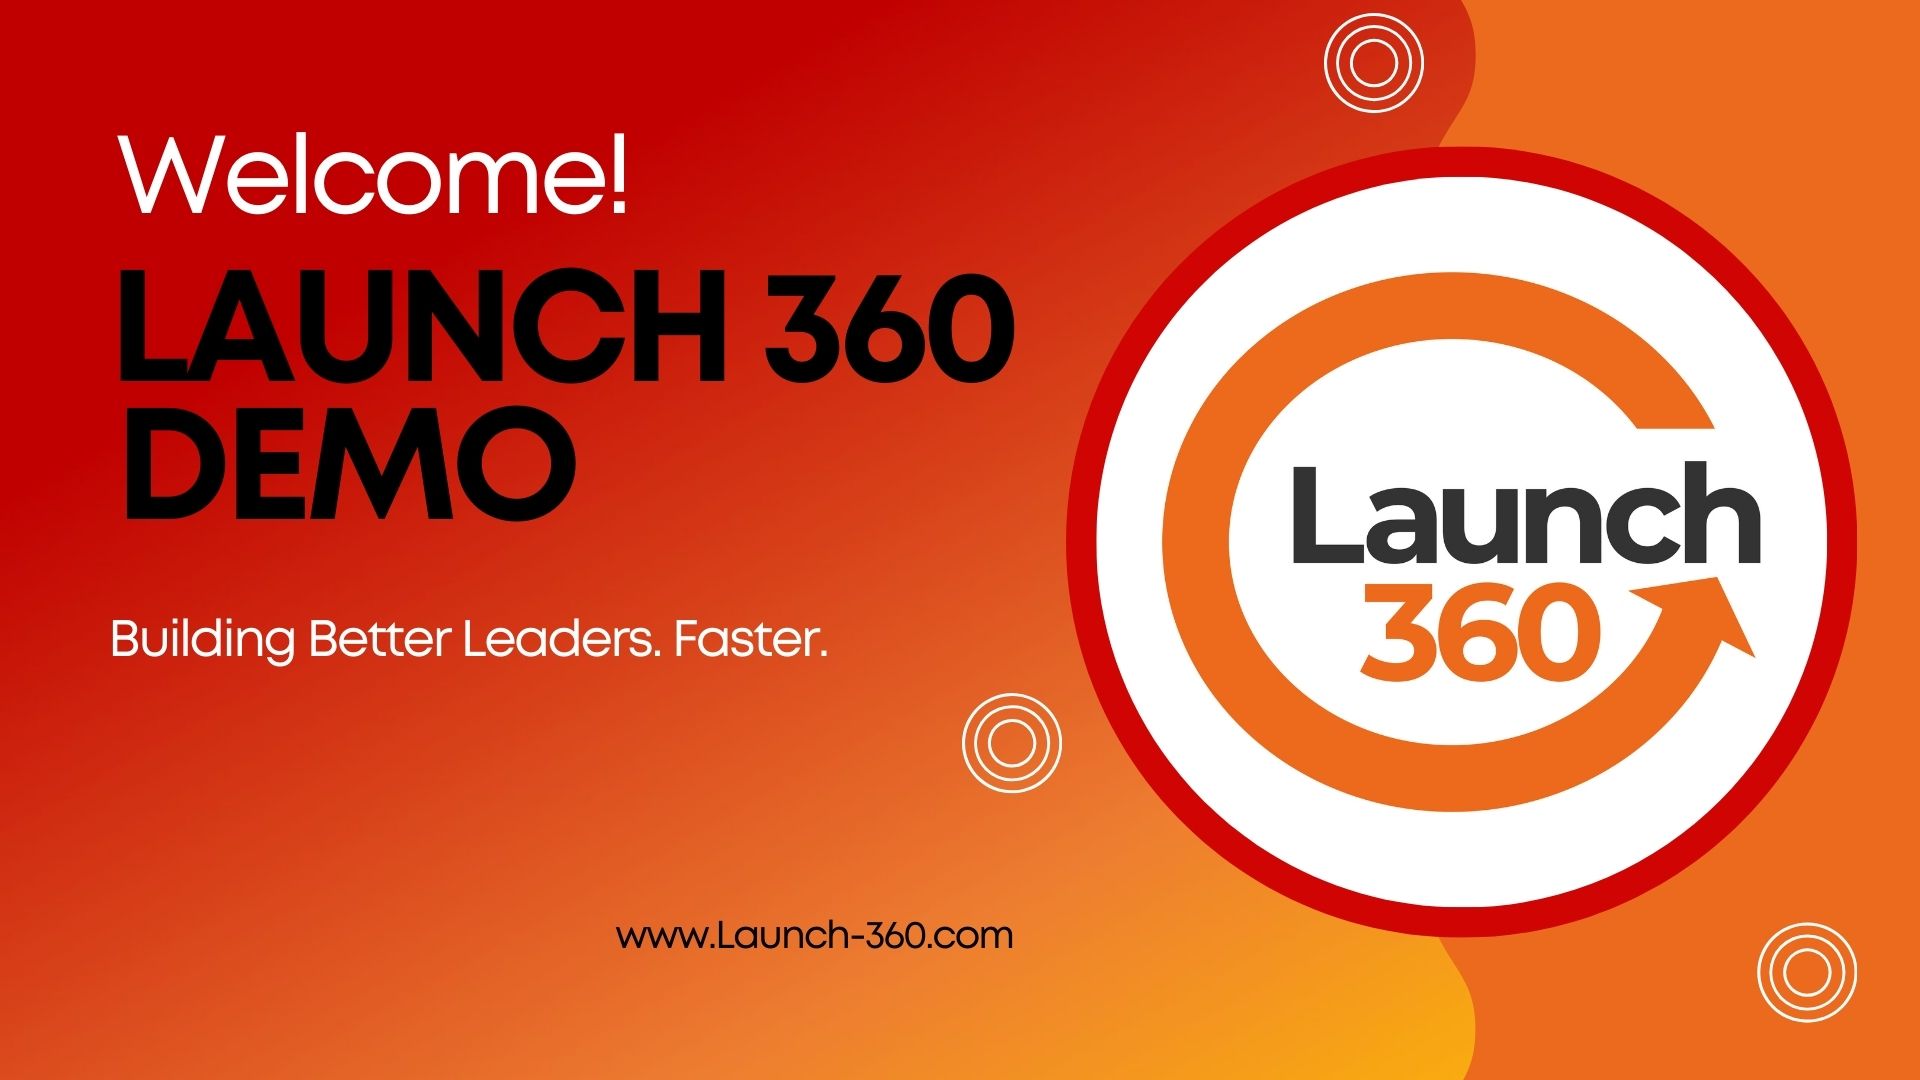 Launch 360 Demo Video